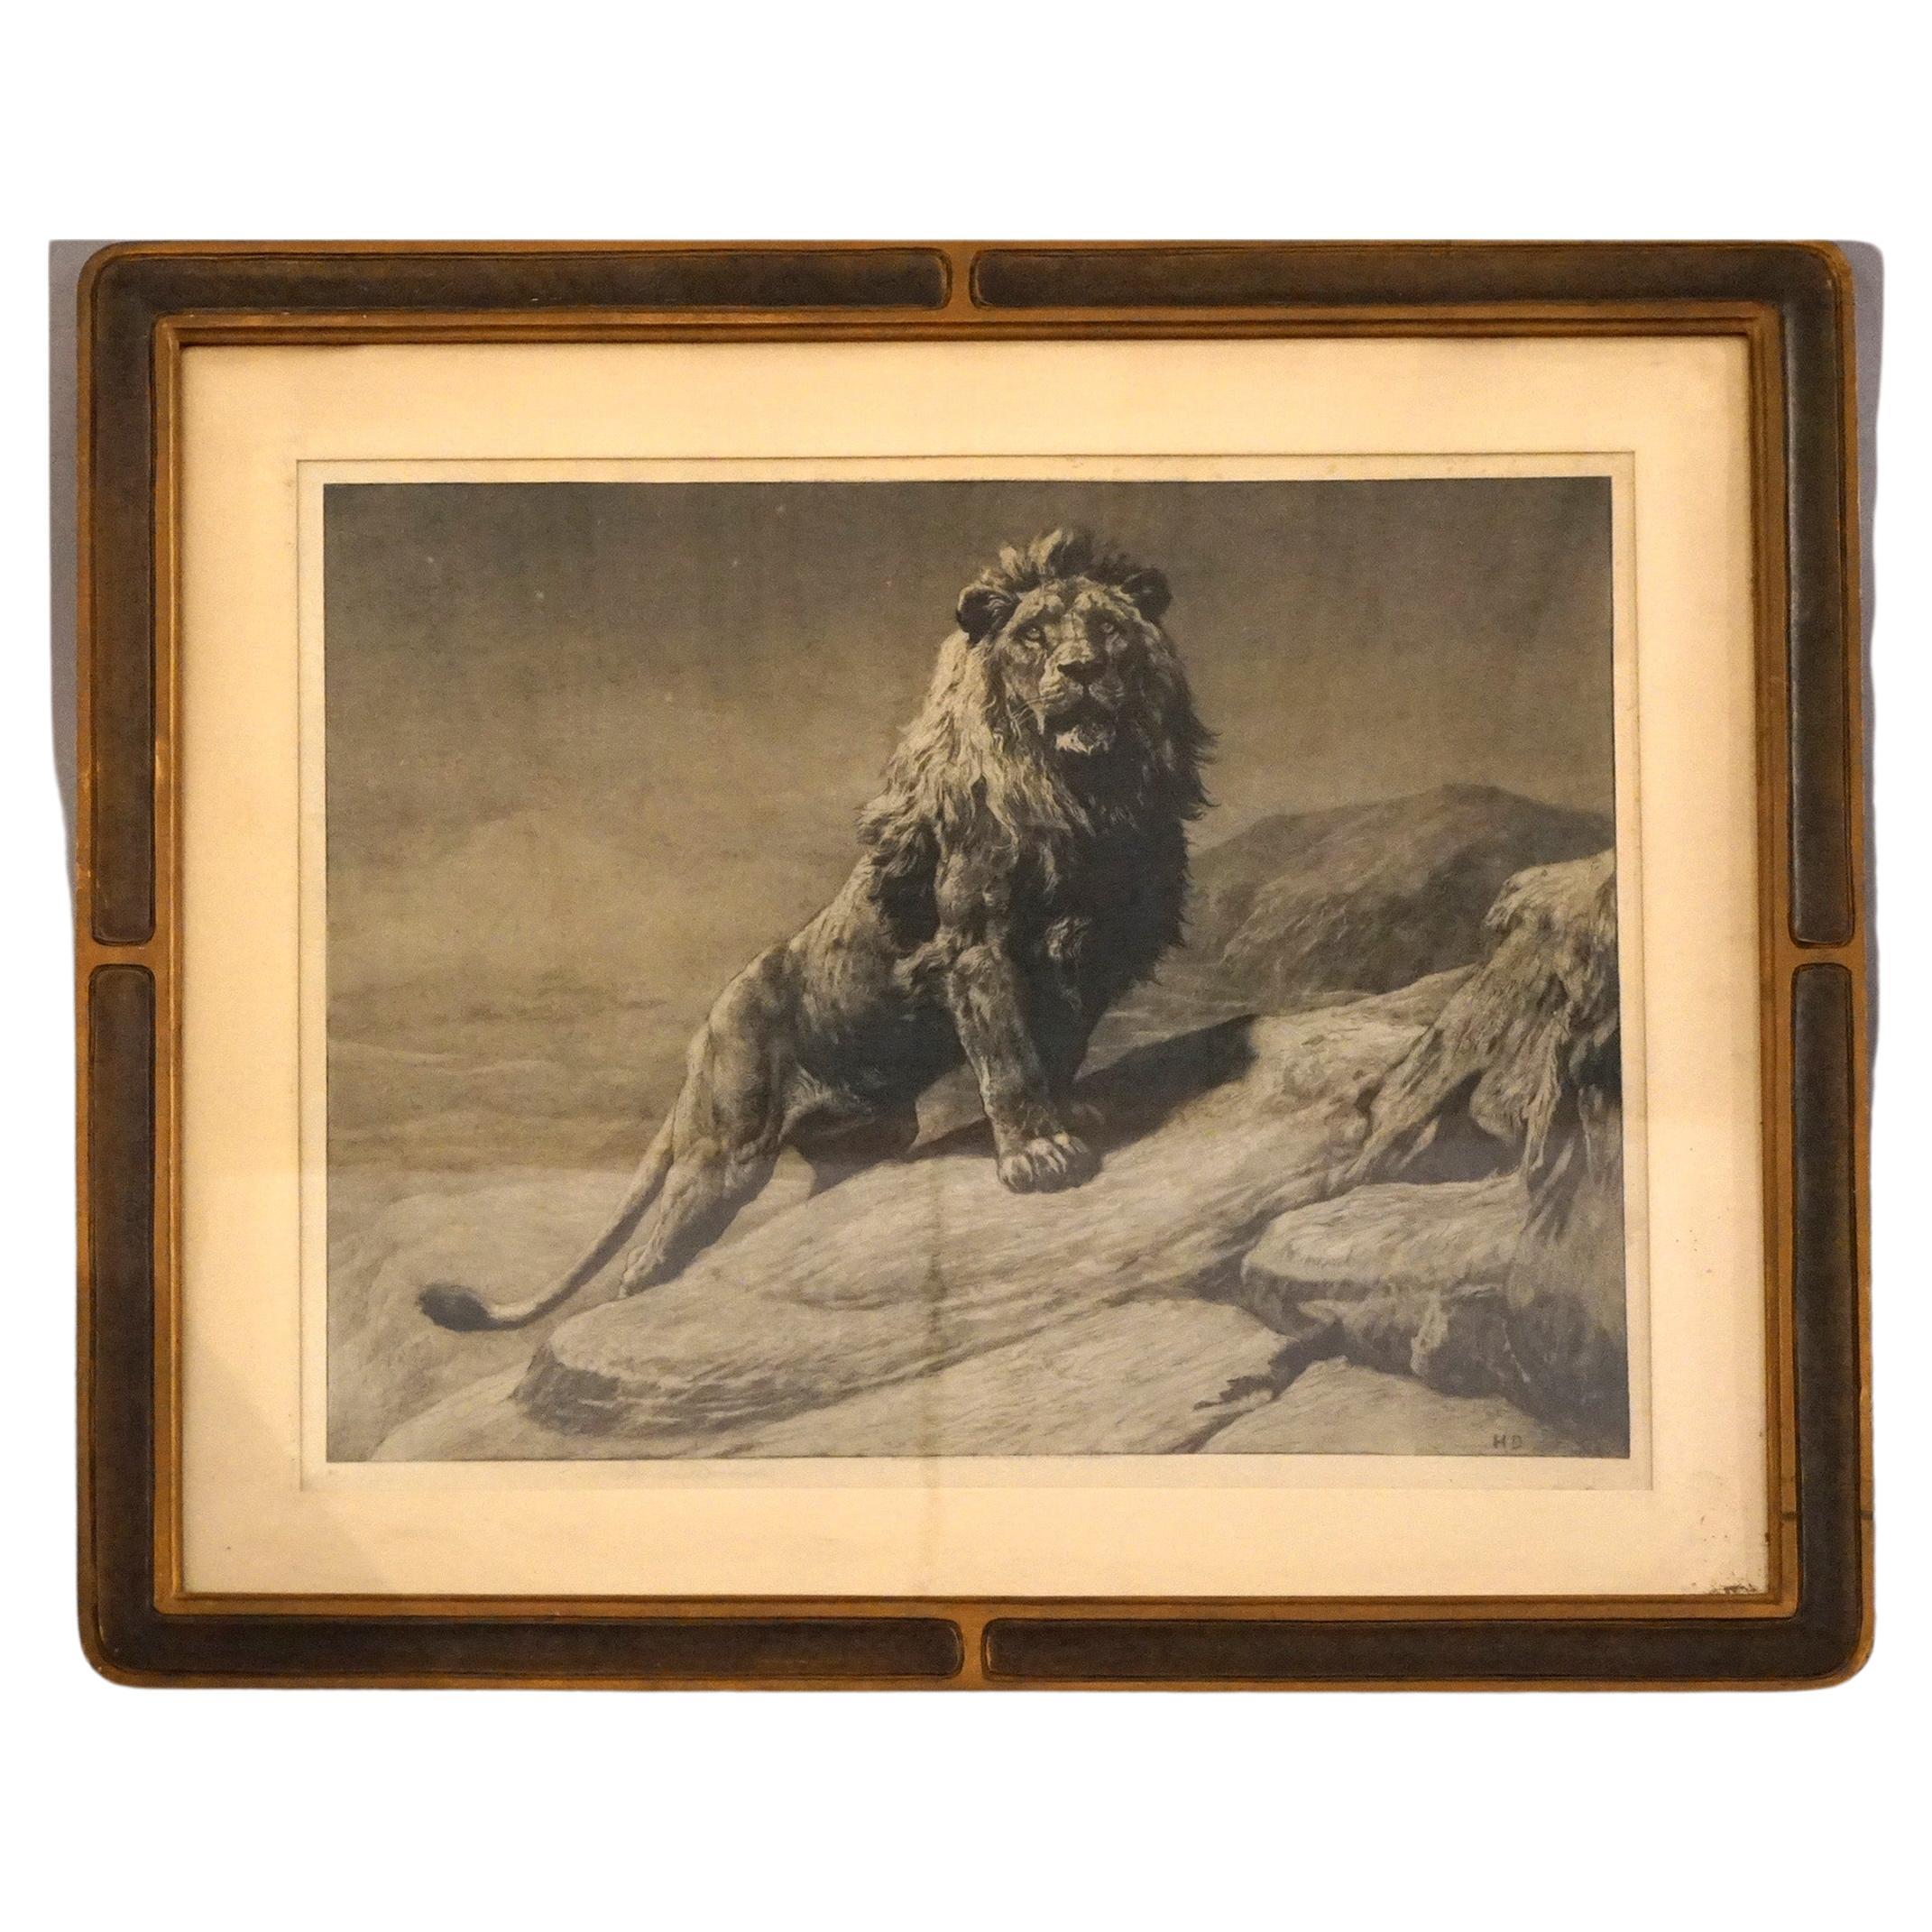 Antique Lithograph Print of an African Lion Circa 1900